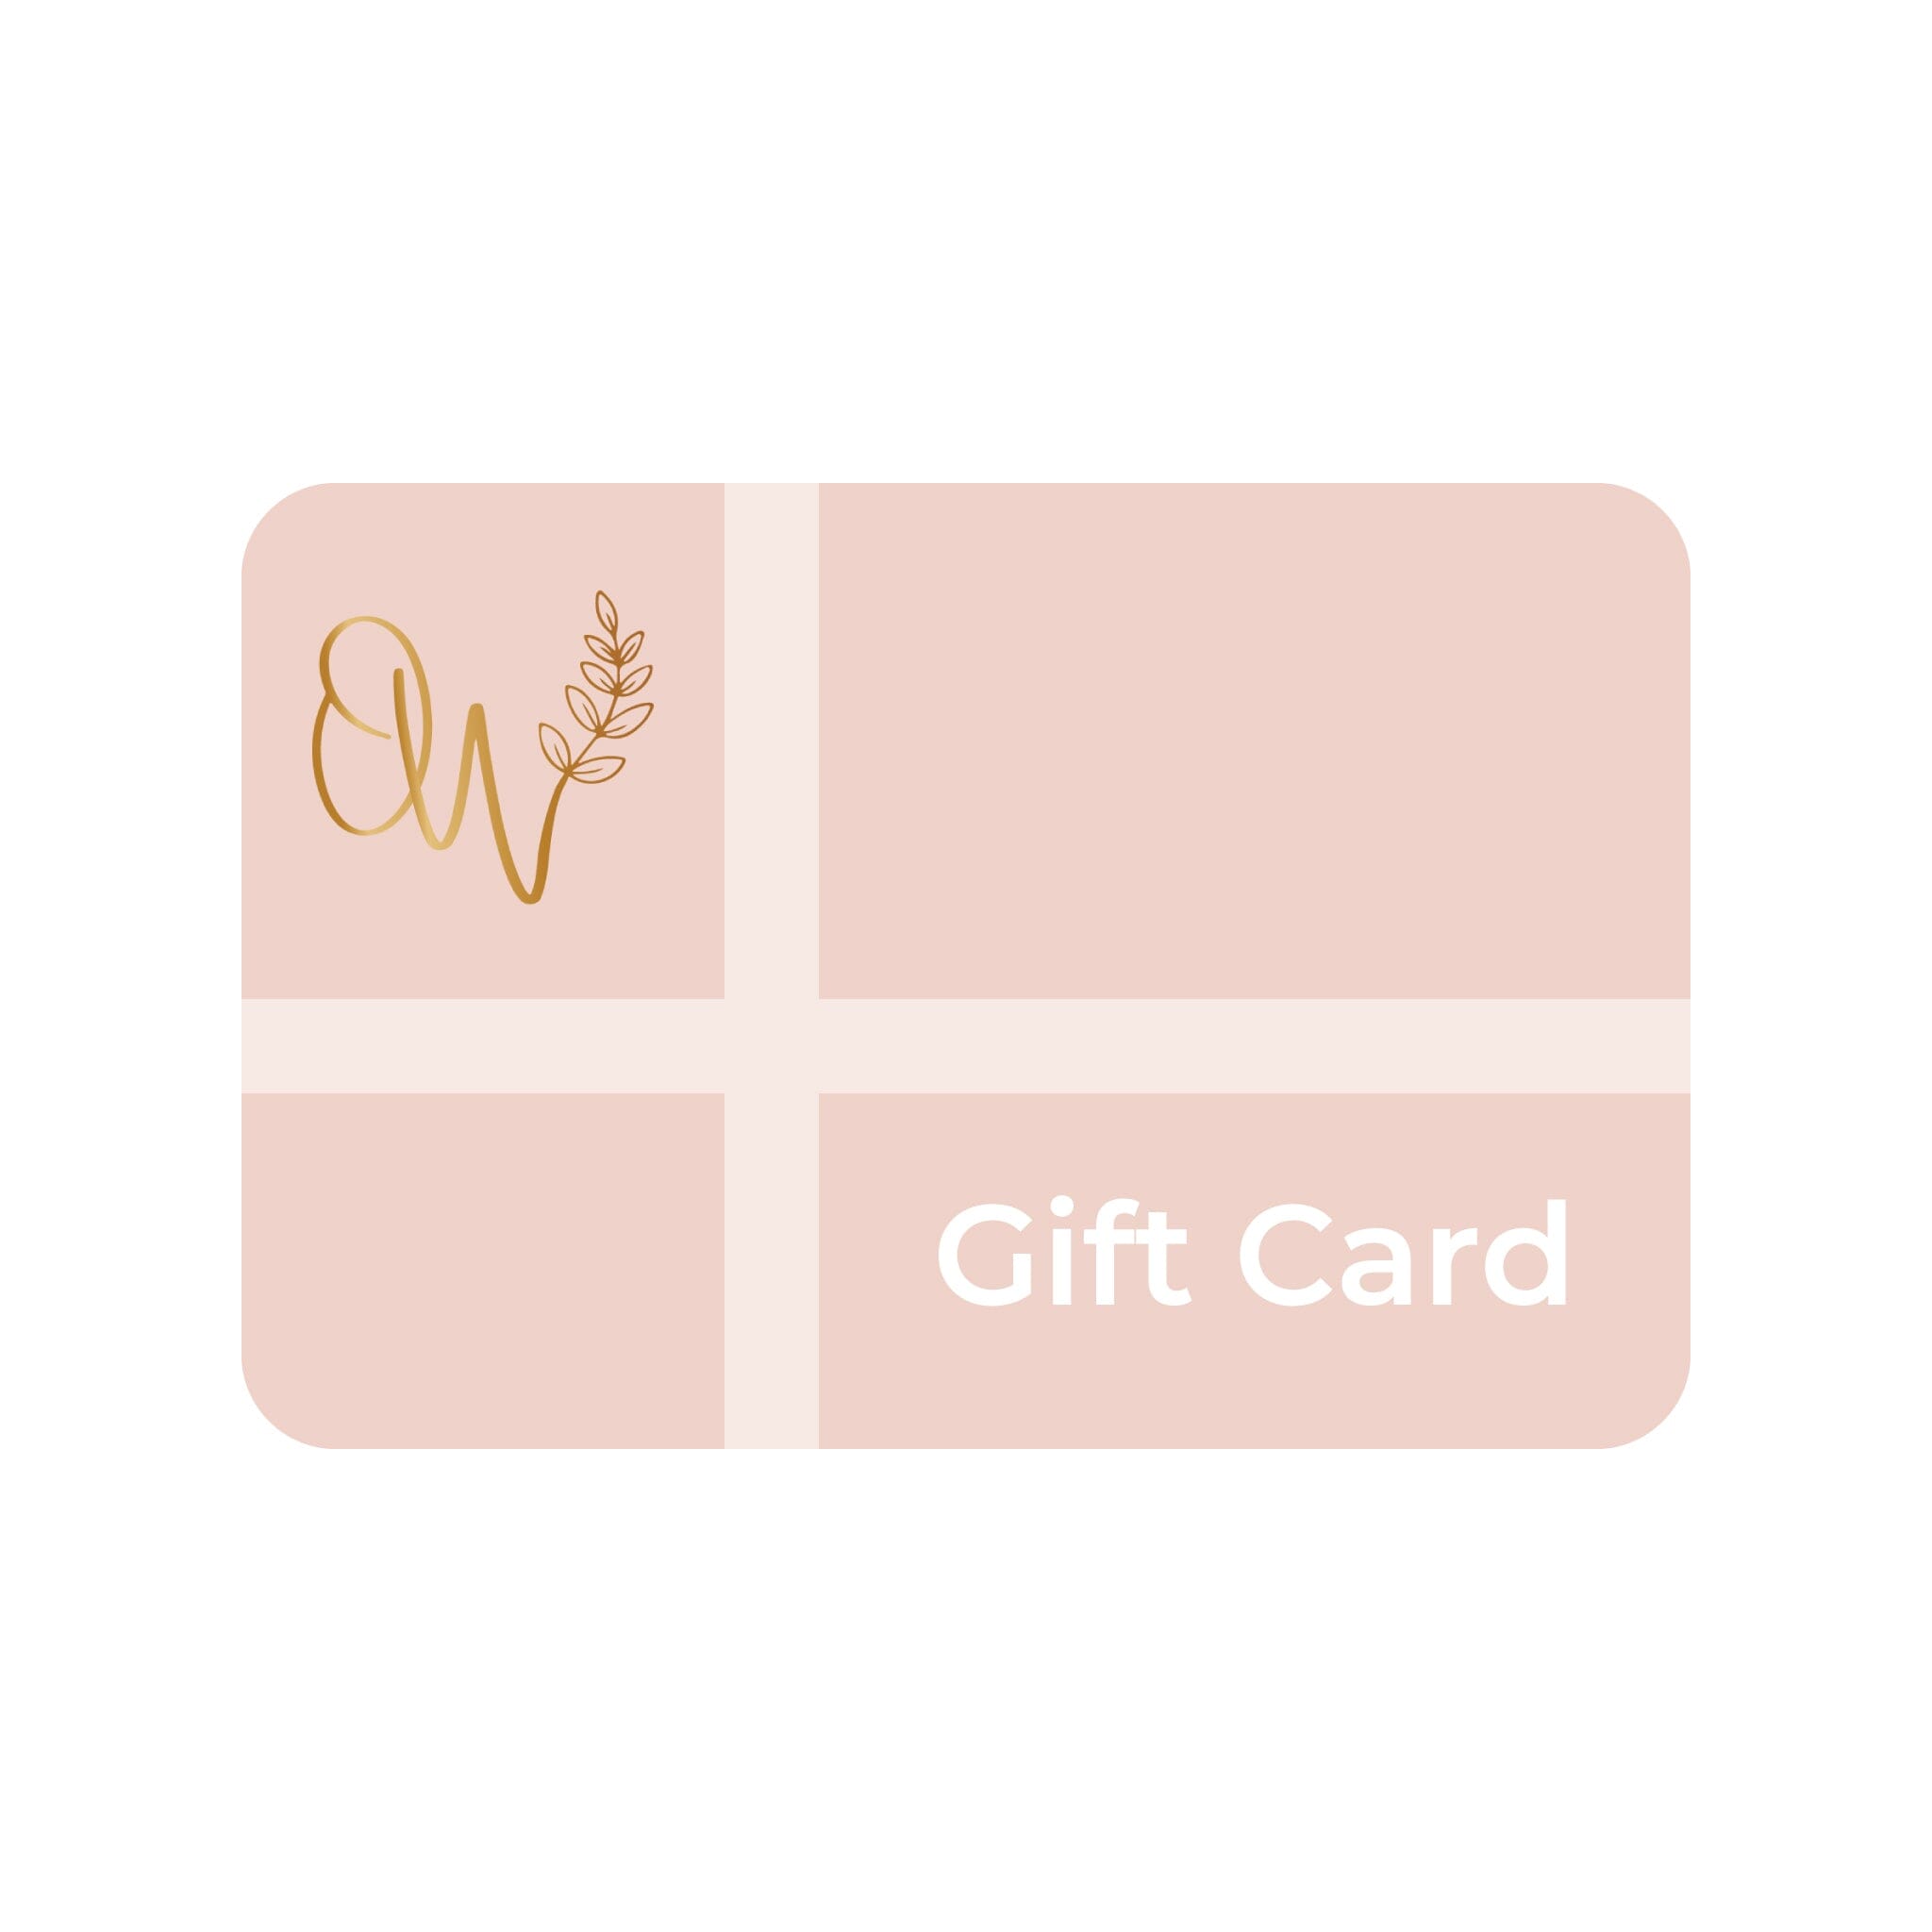 Gift Card Gift Card Organik & Wellness Trading Co. Australia 